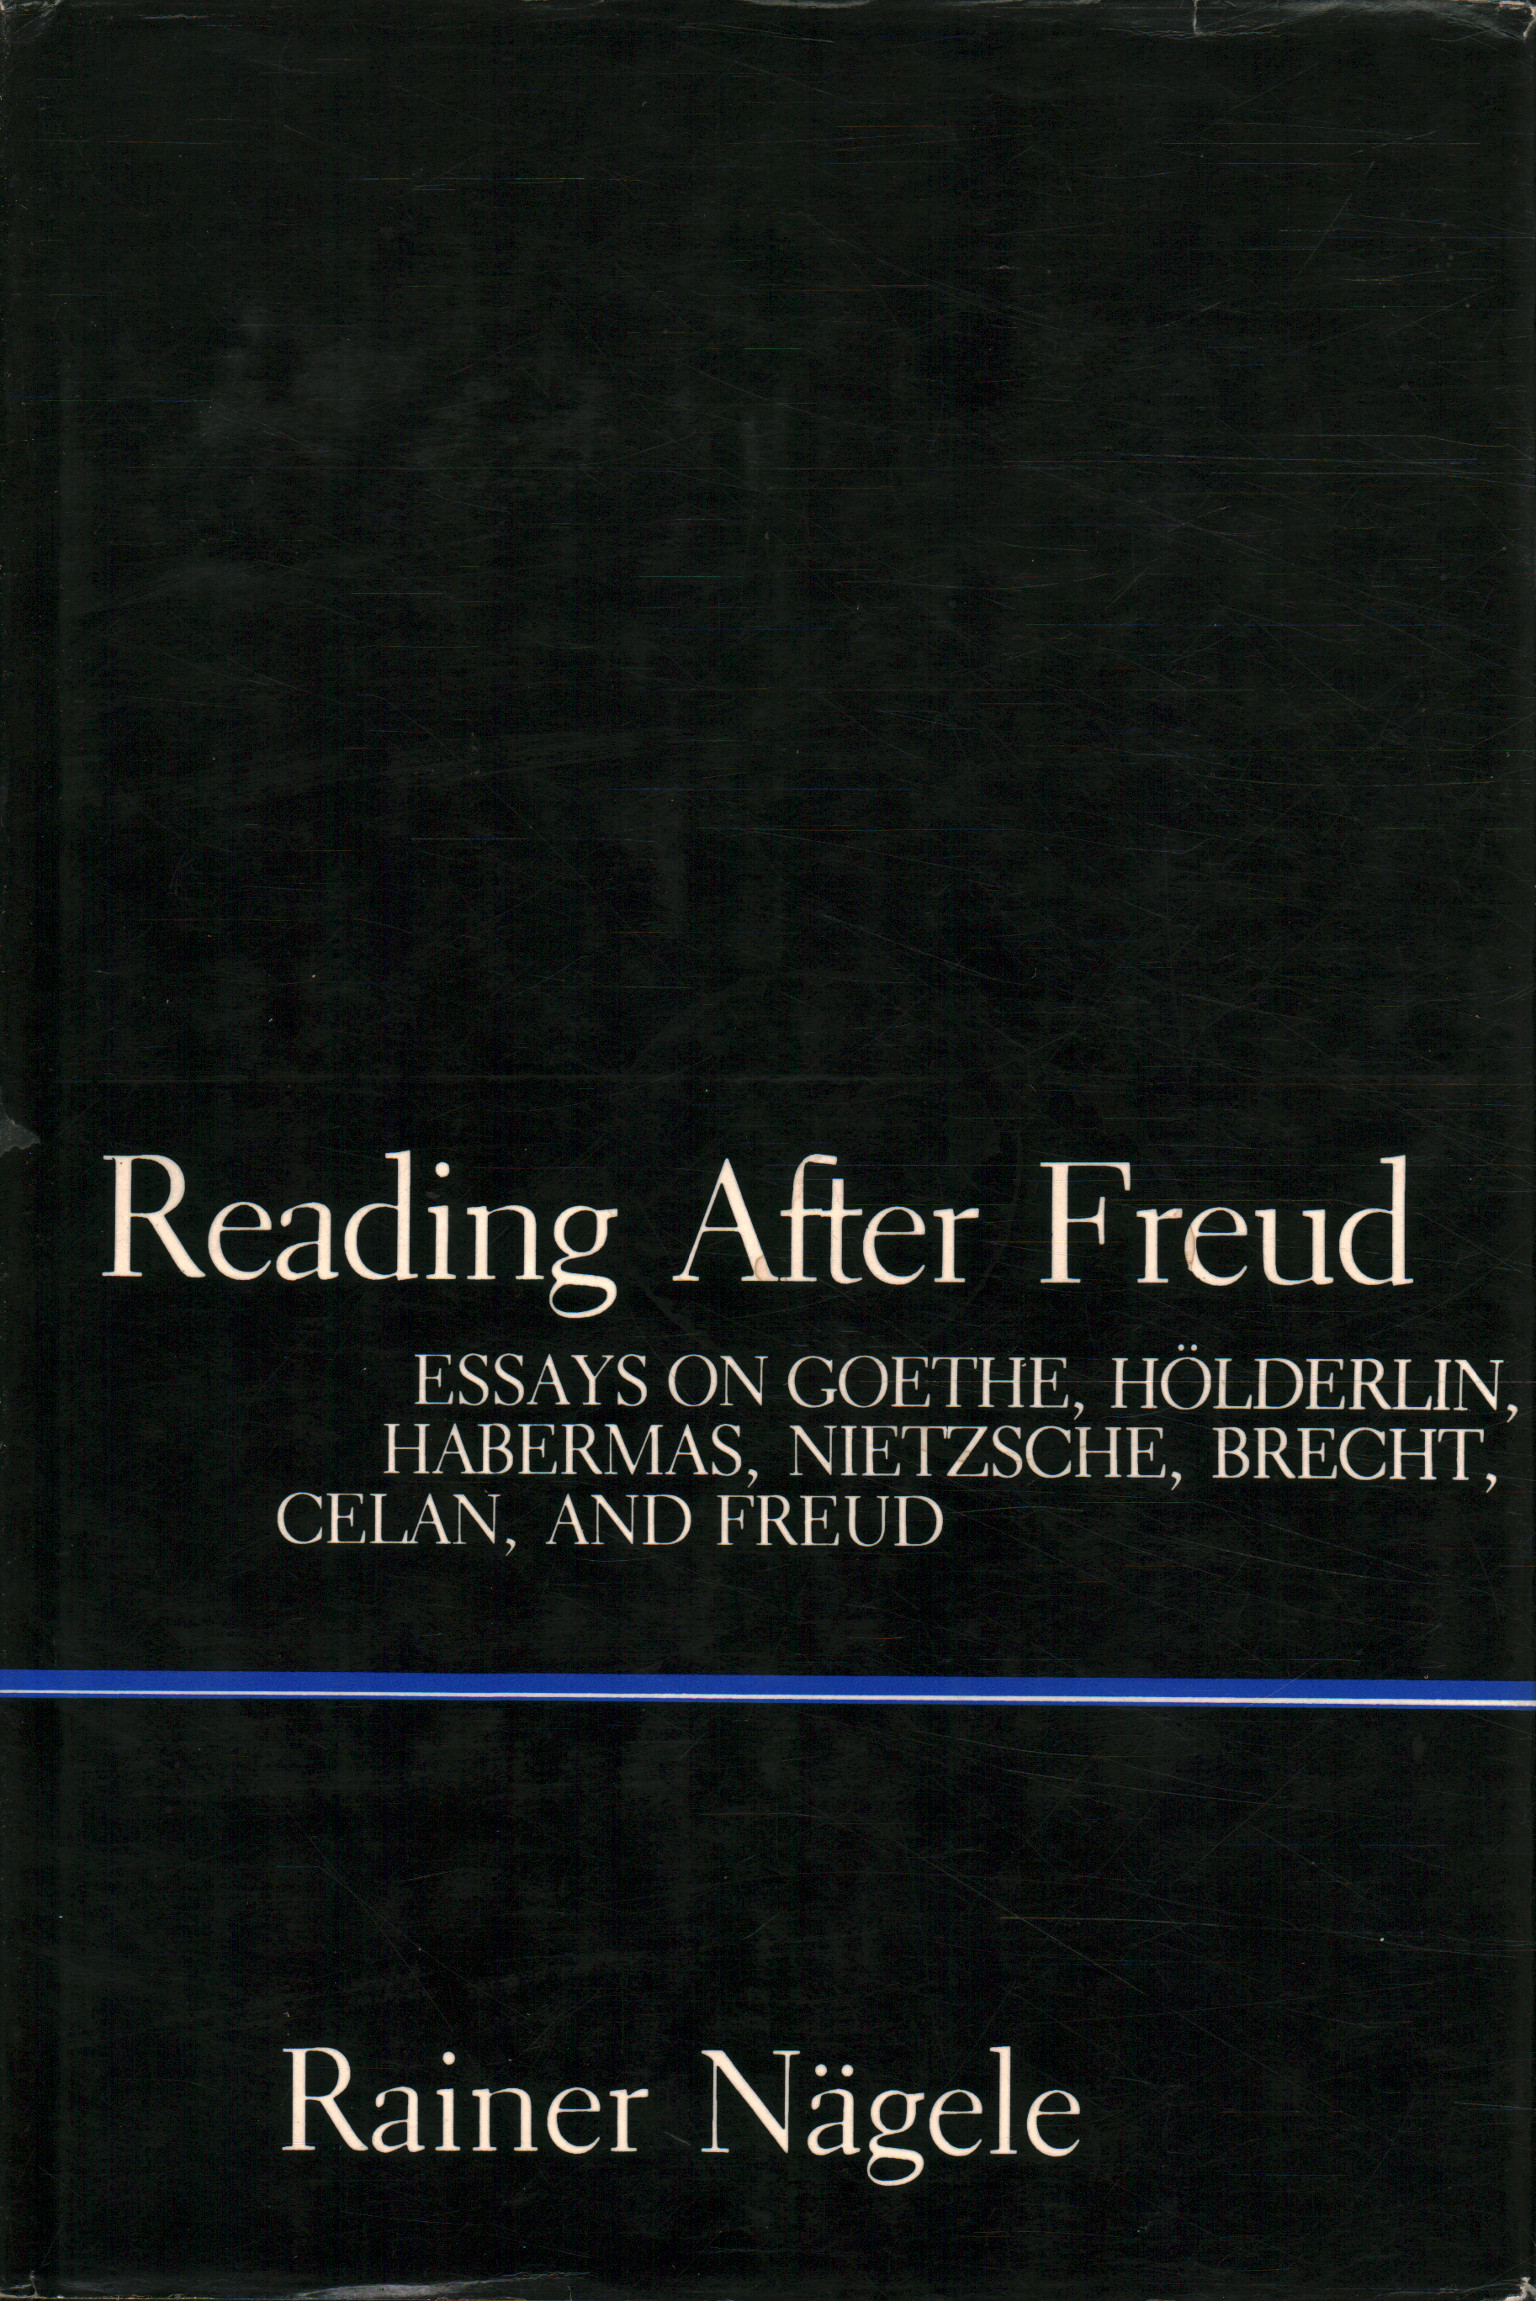 Lire après Freud